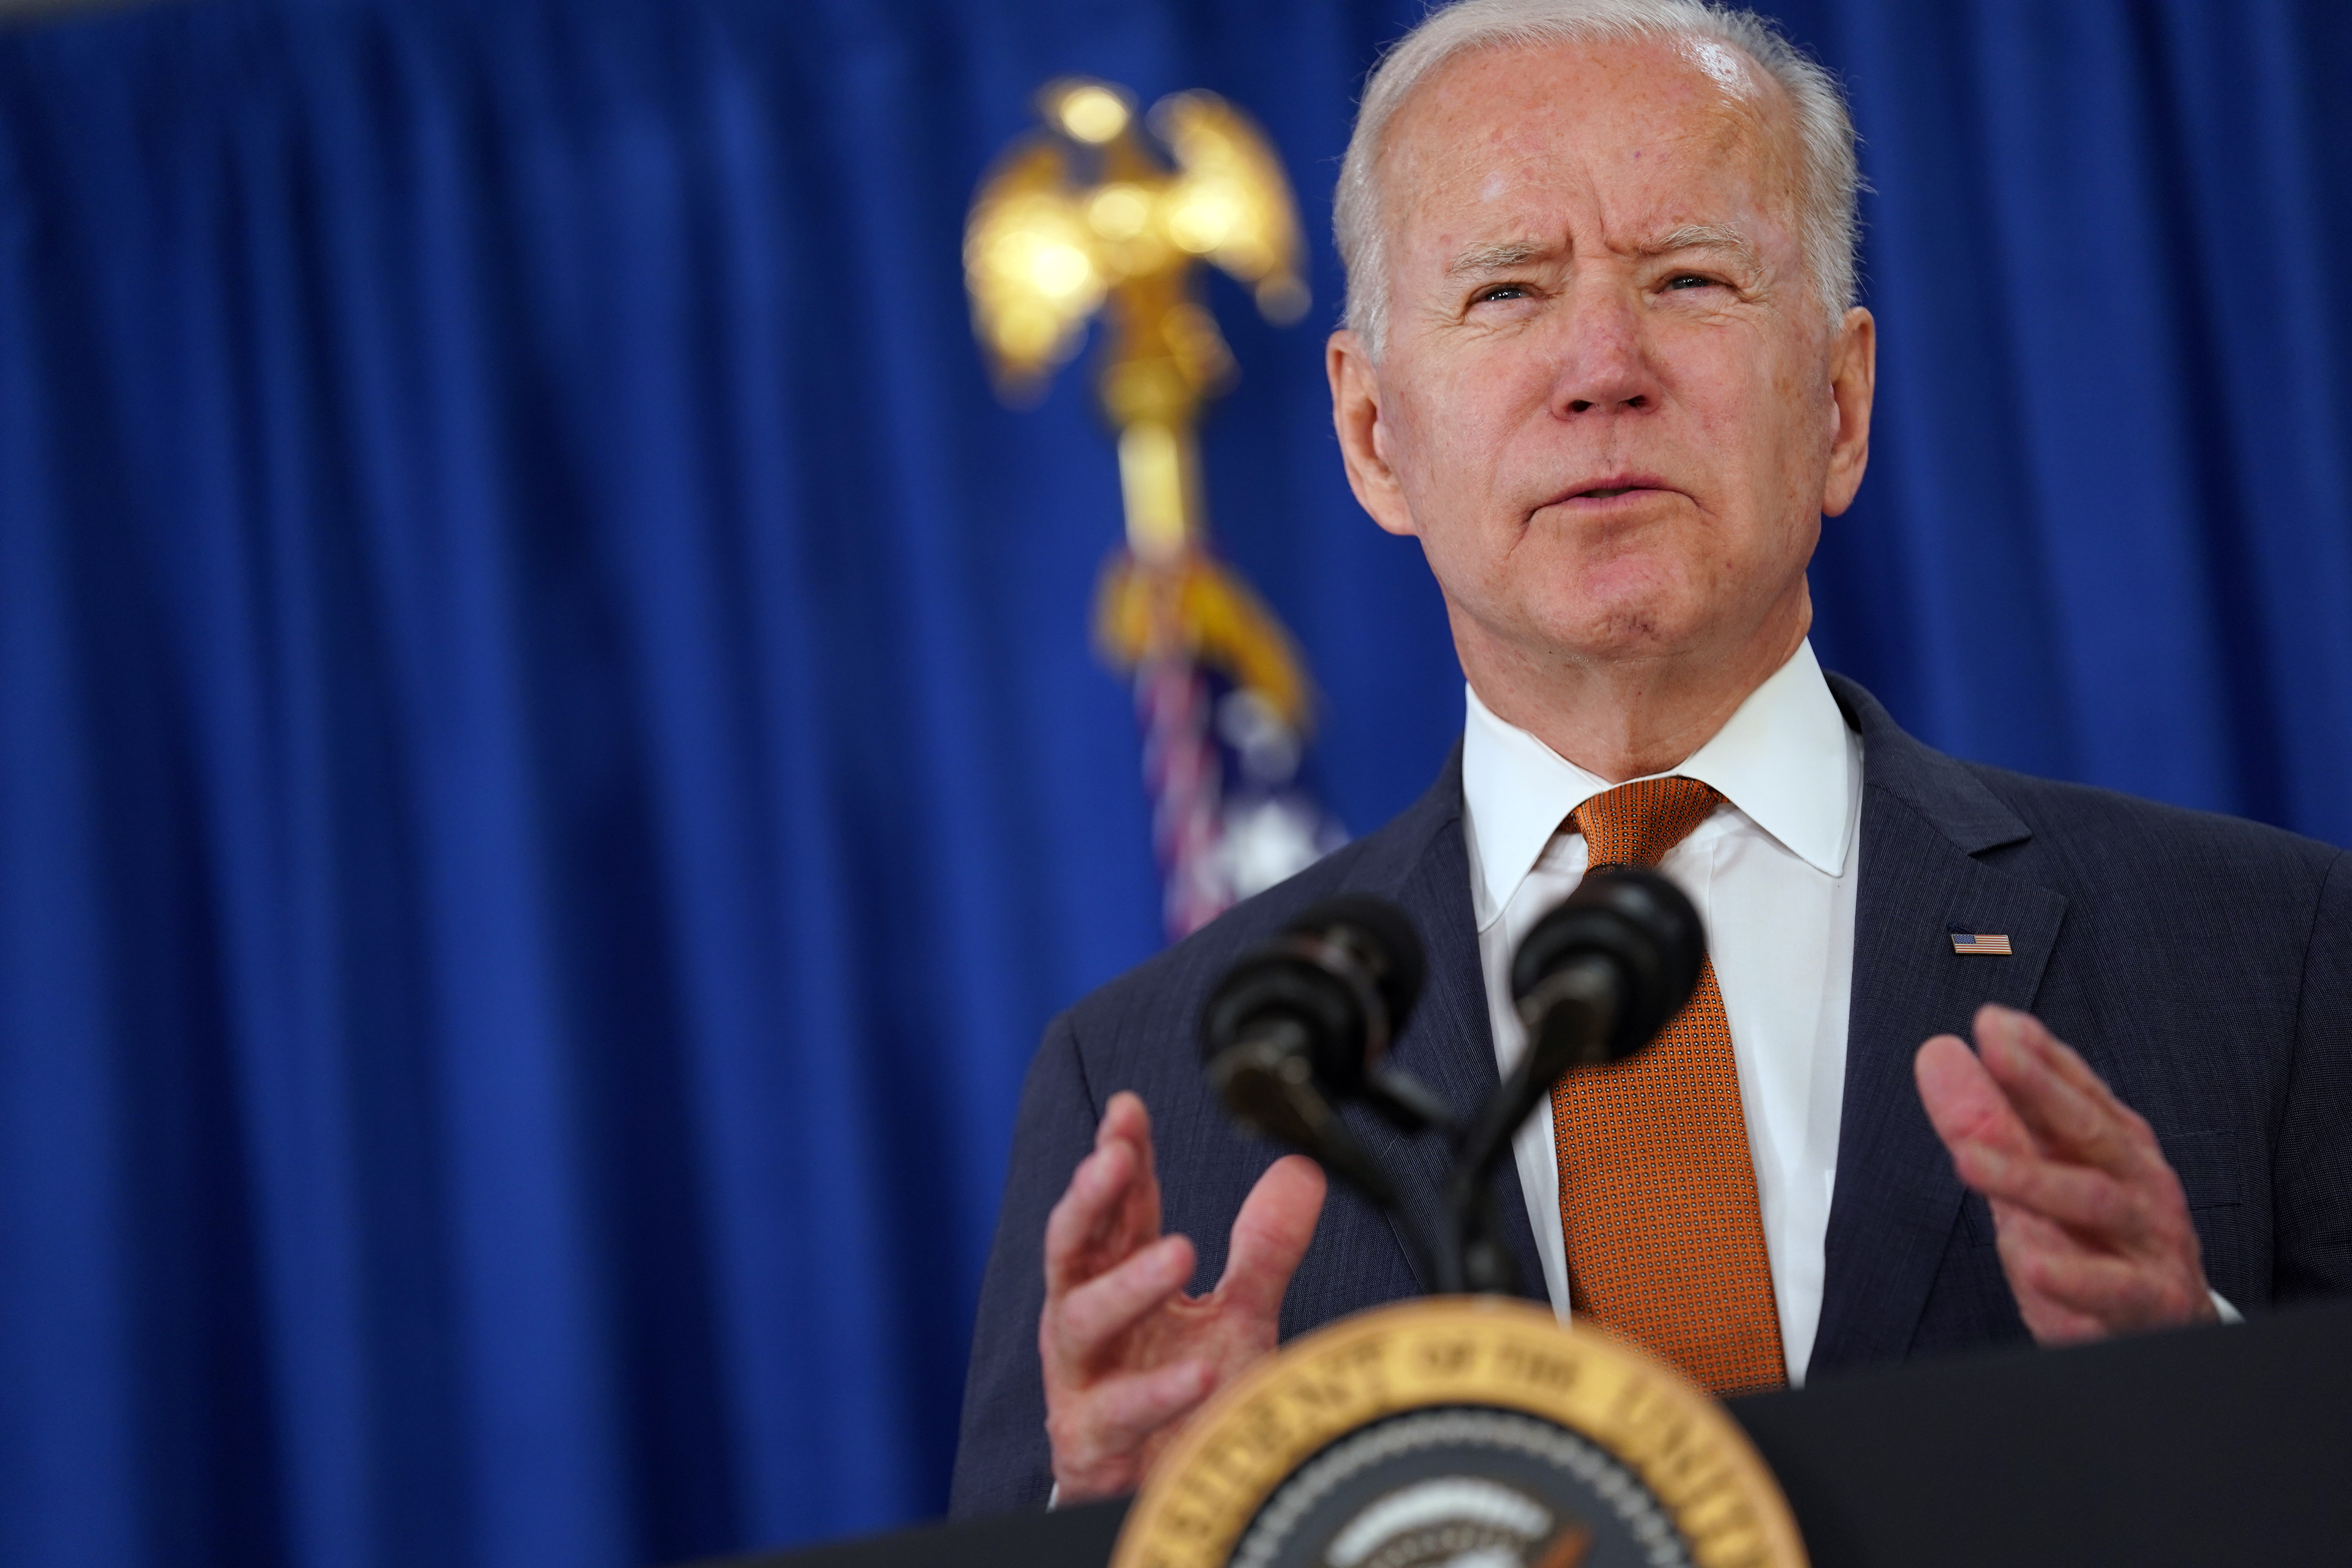 Biden rebuffs GOP infrastructure offer, citing broader goals | Star Tribune